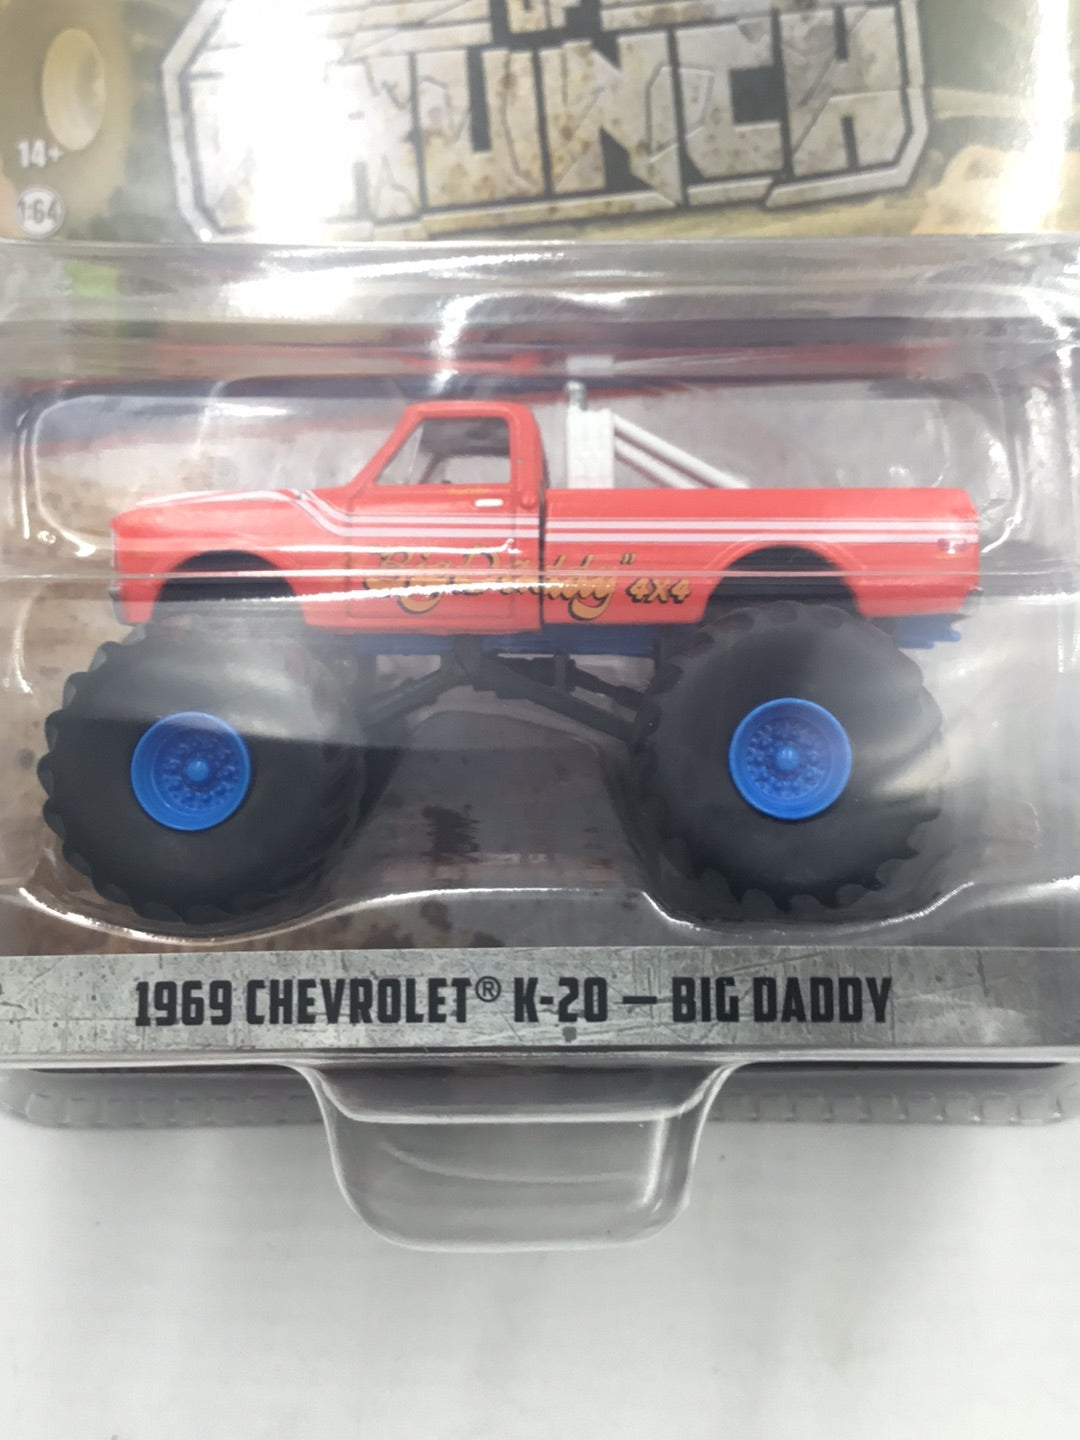 Greenlight Kings of crunch series 13 1969 Chevrolet K-20 Big Daddy Walmart chase